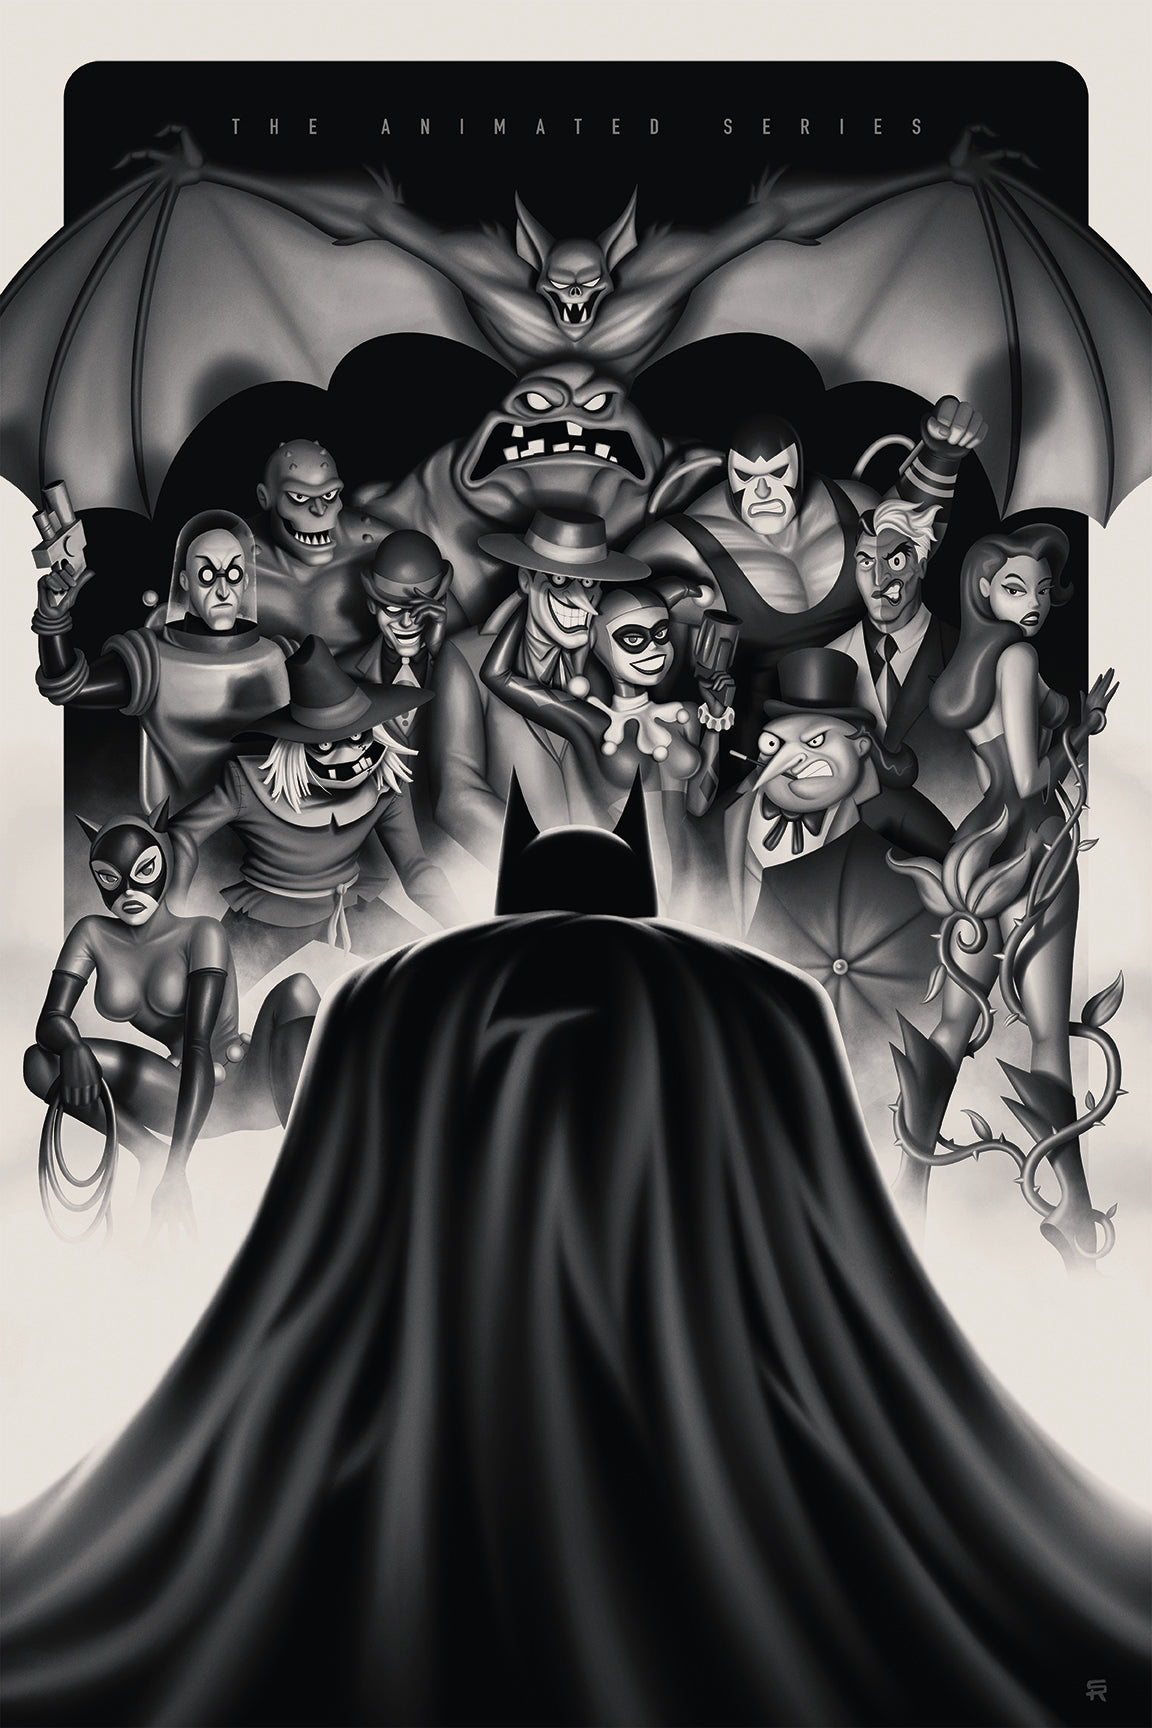 Steve Reeves "Batman: The Animated Series" Variant